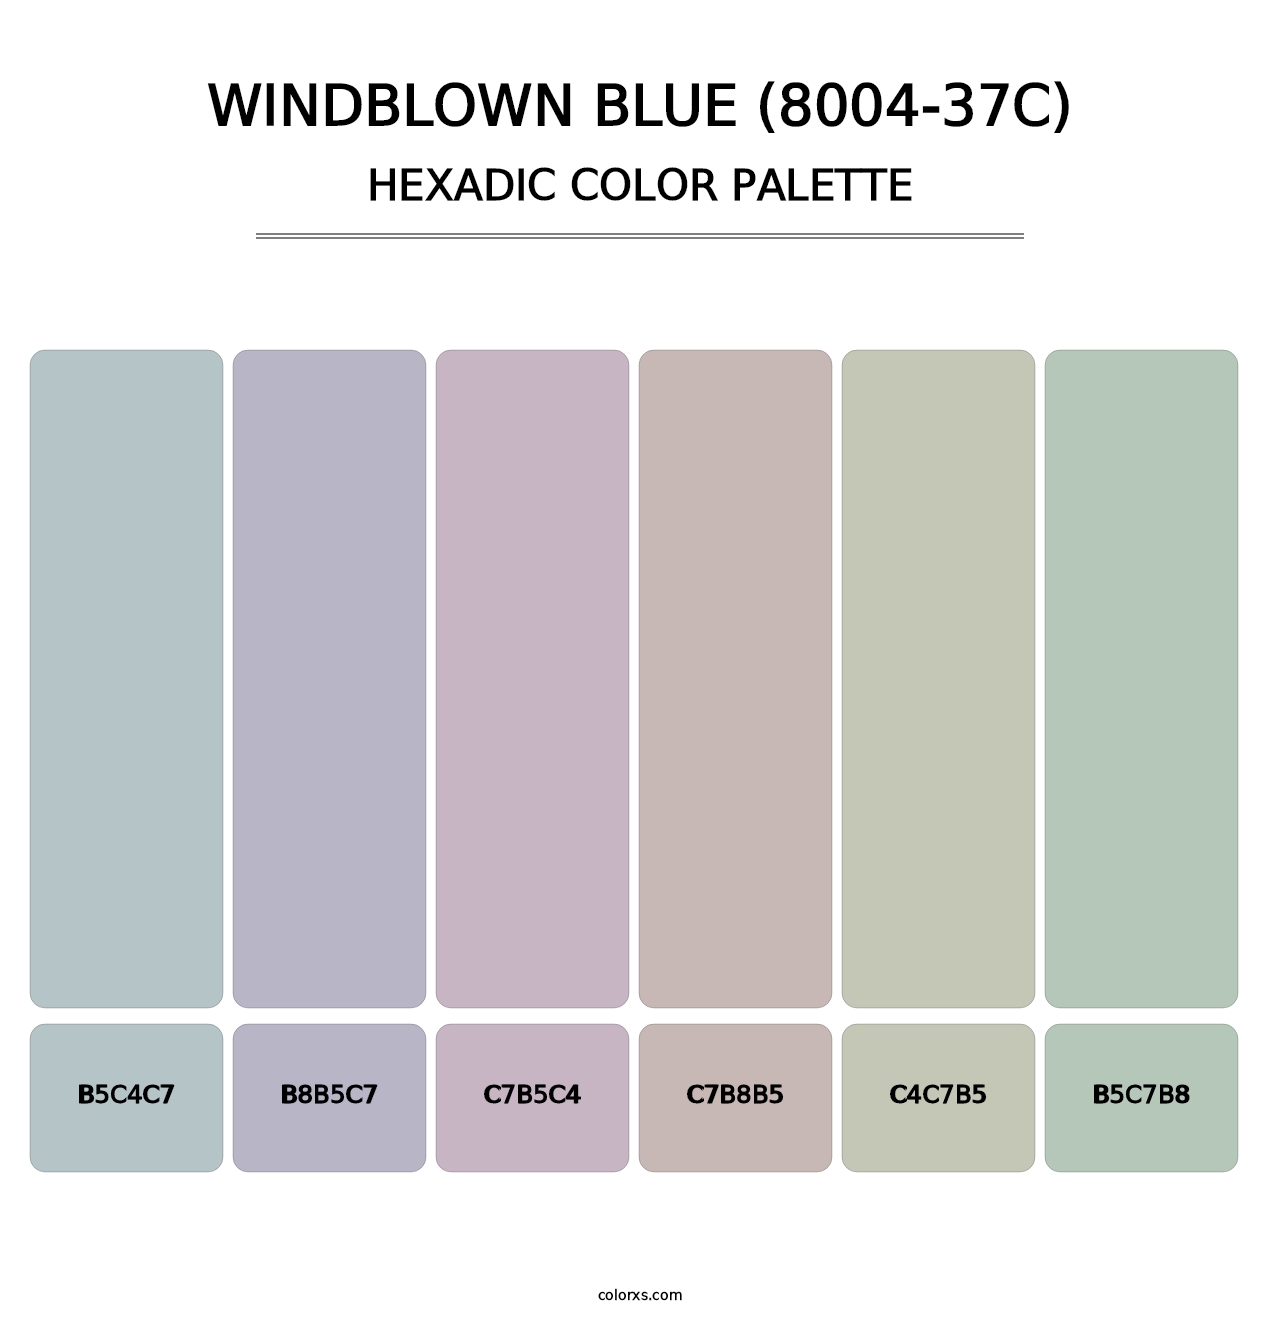 Windblown Blue (8004-37C) - Hexadic Color Palette